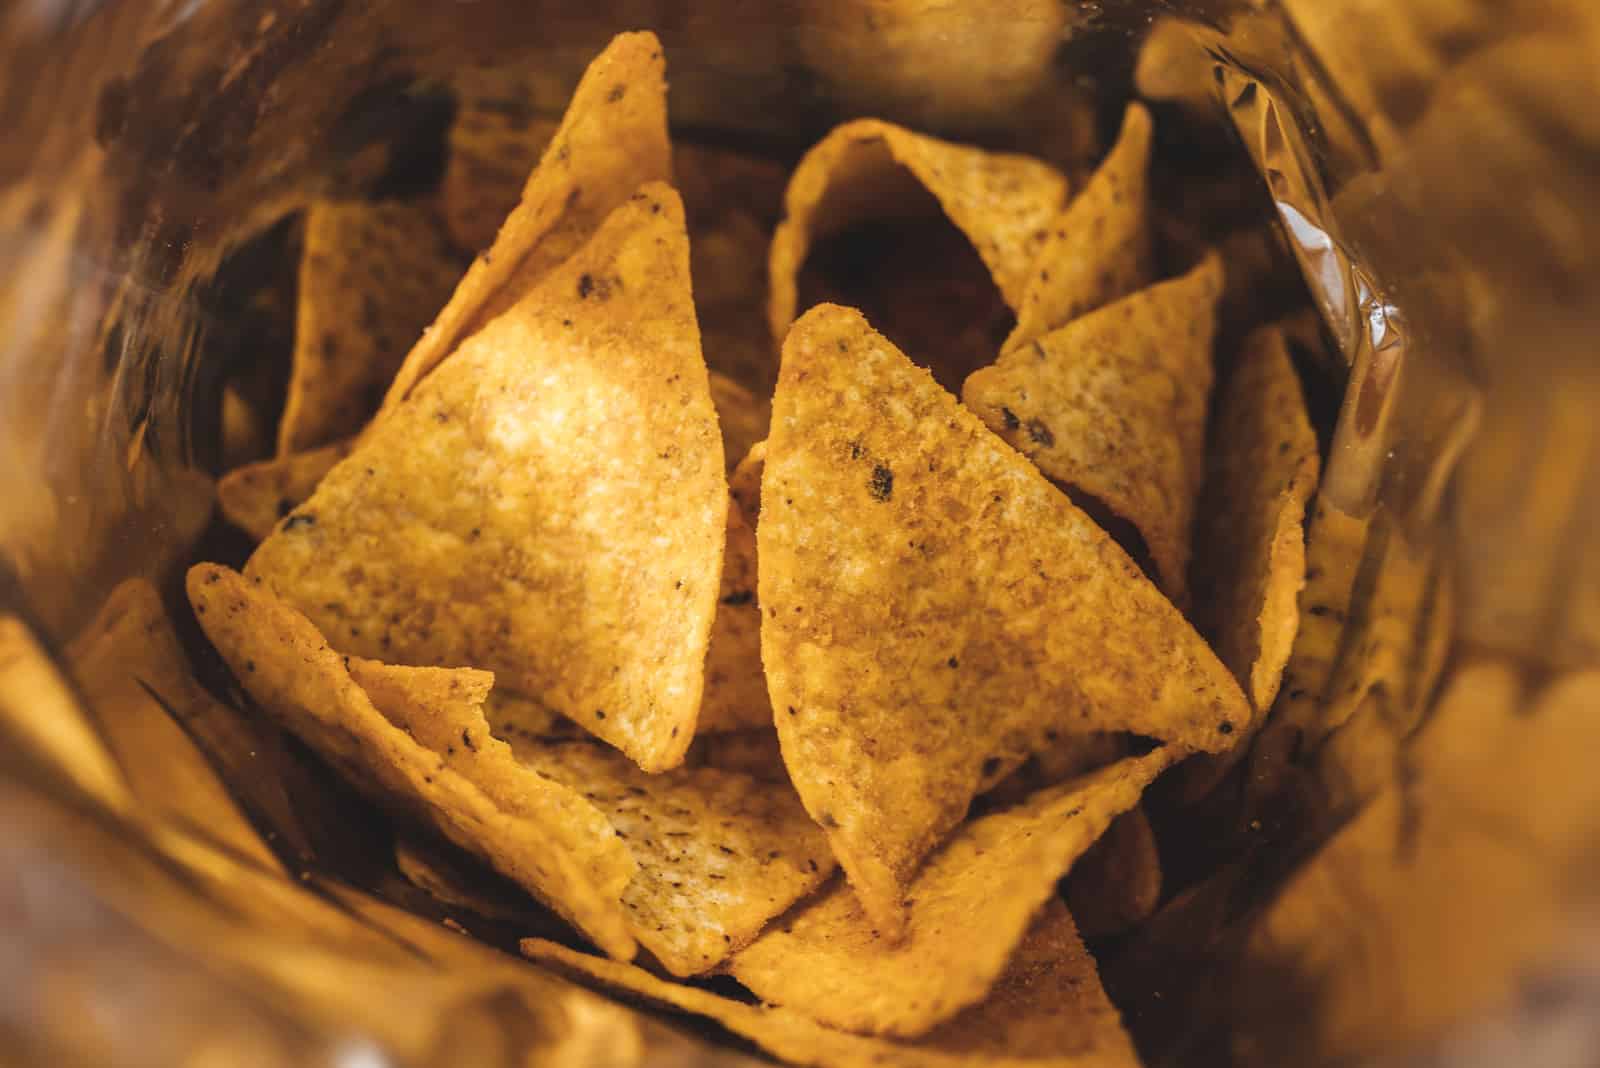 doritos chips in a bag